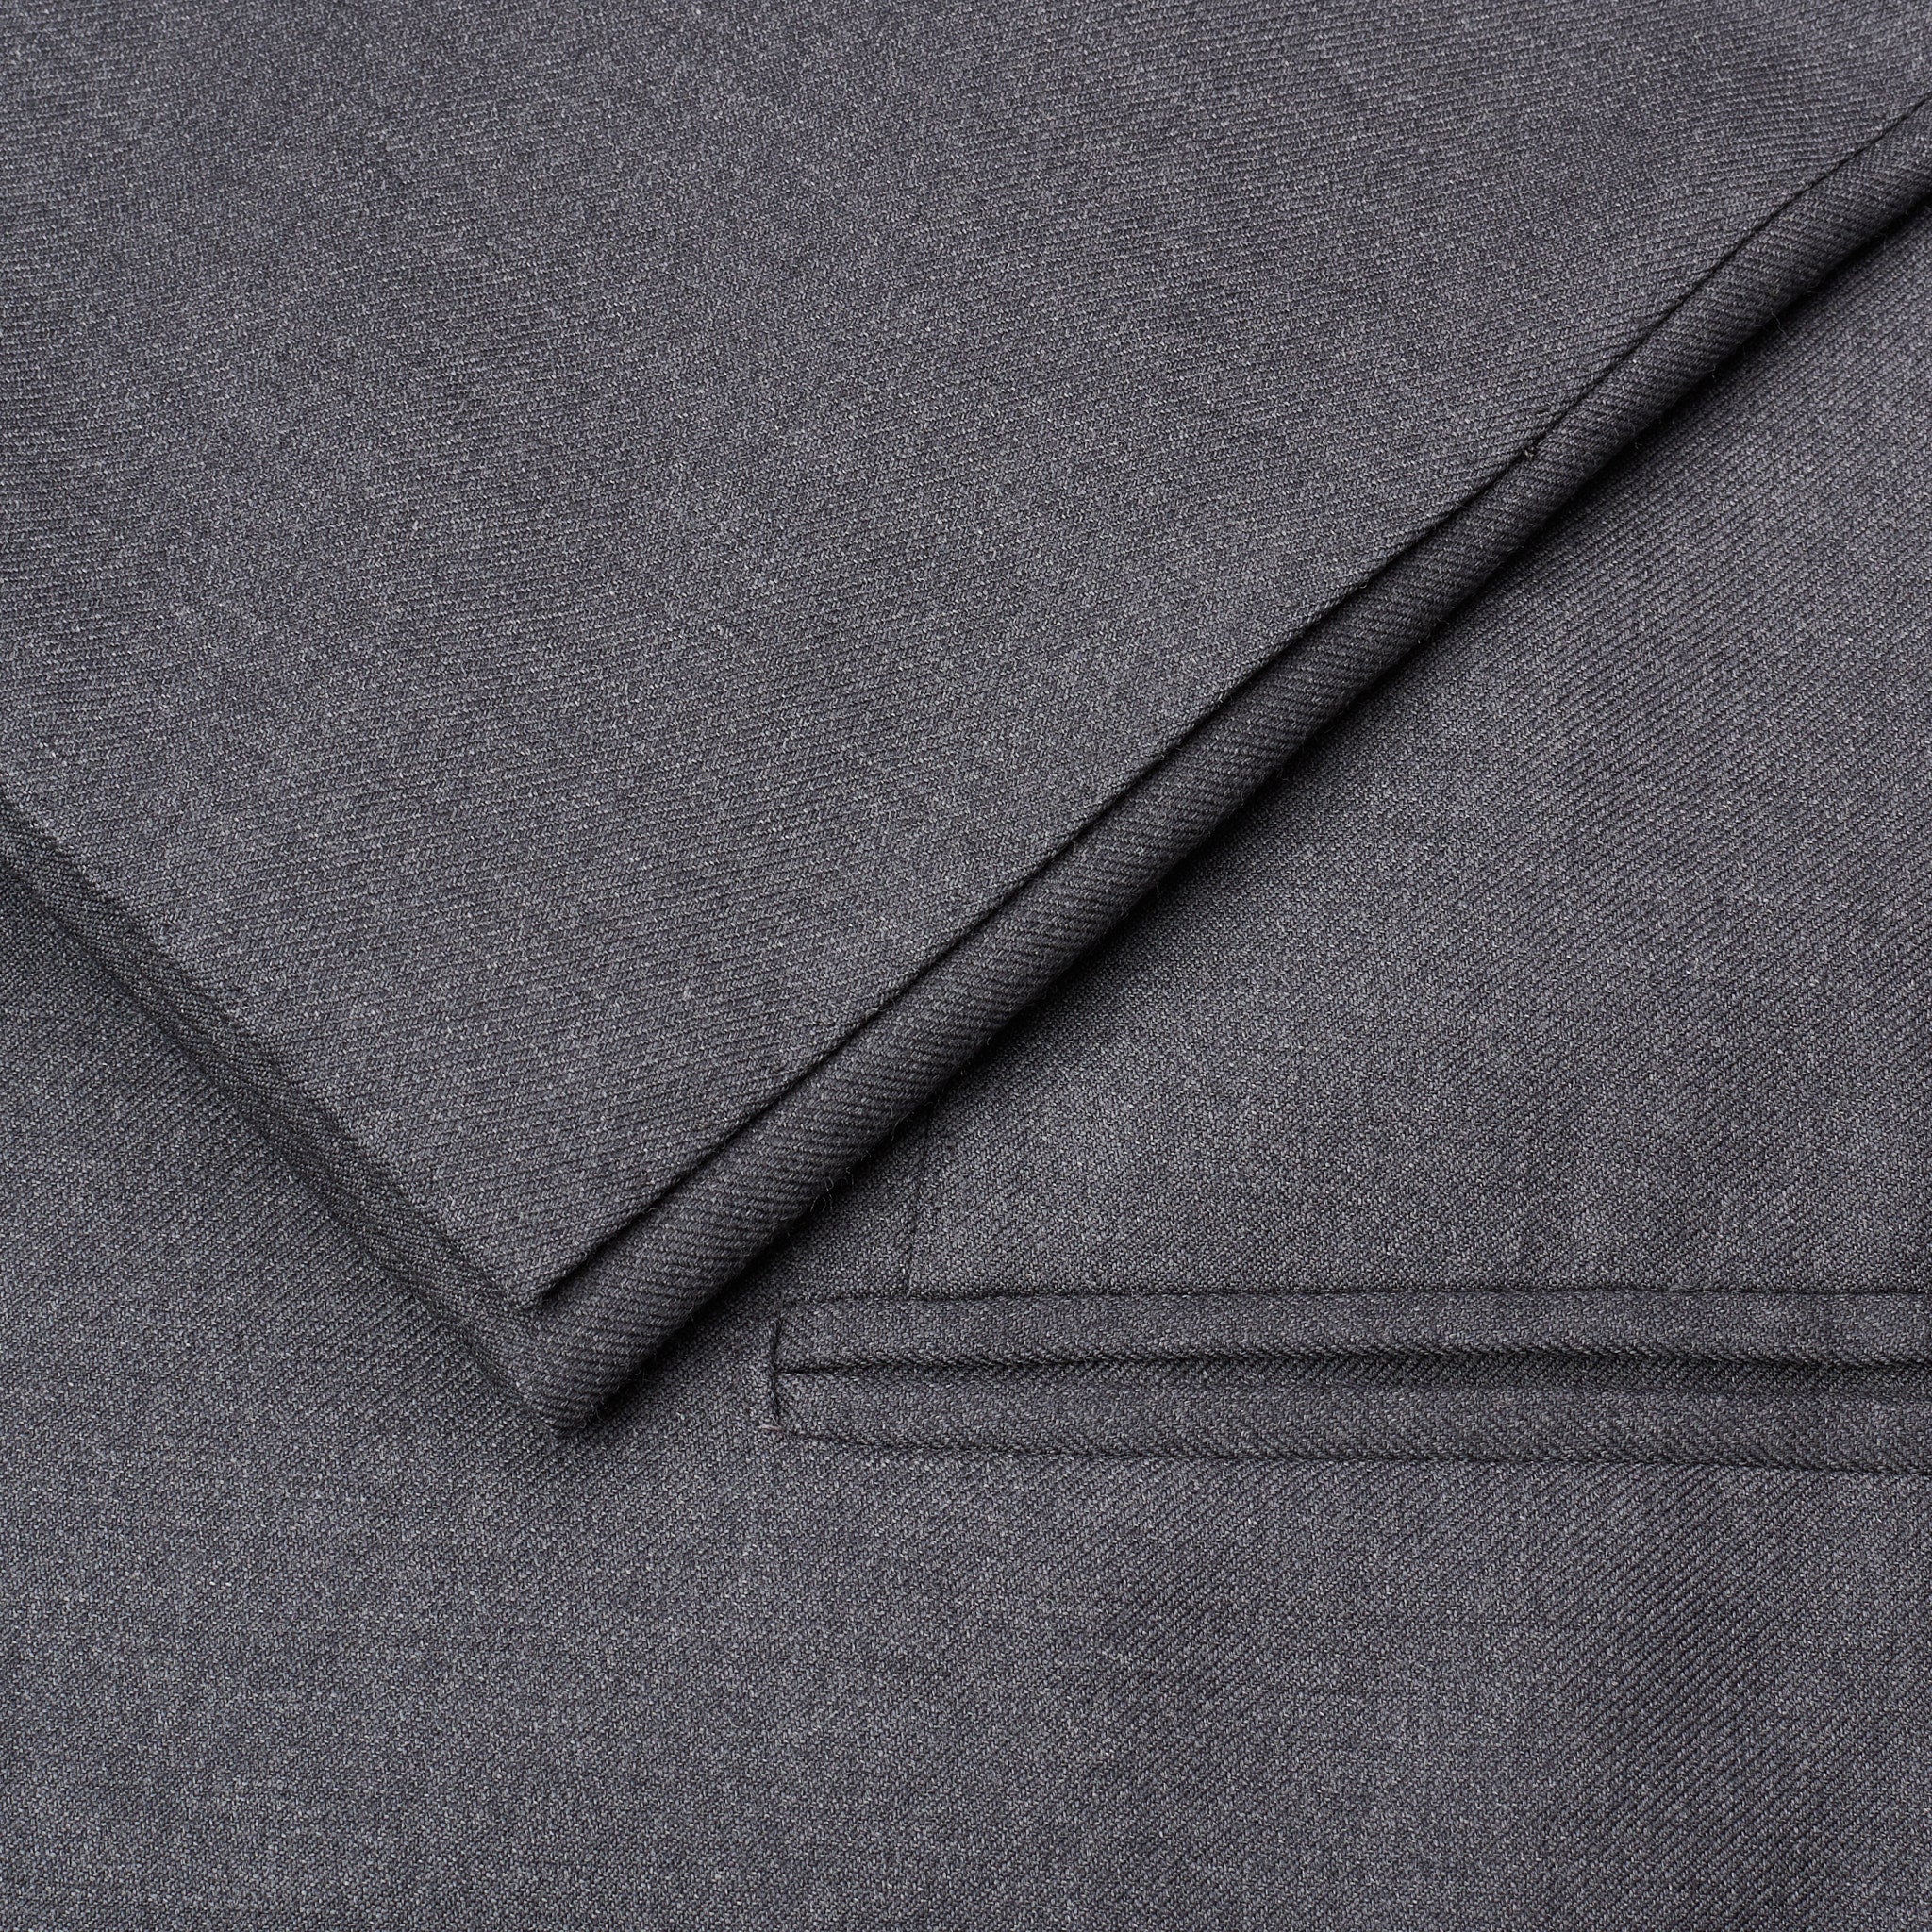 Sartoria CHIAIA Napoli Handmade Gray Wool Suit EU 48 NEW US 38 Slim Fit SARTORIA CHIAIA